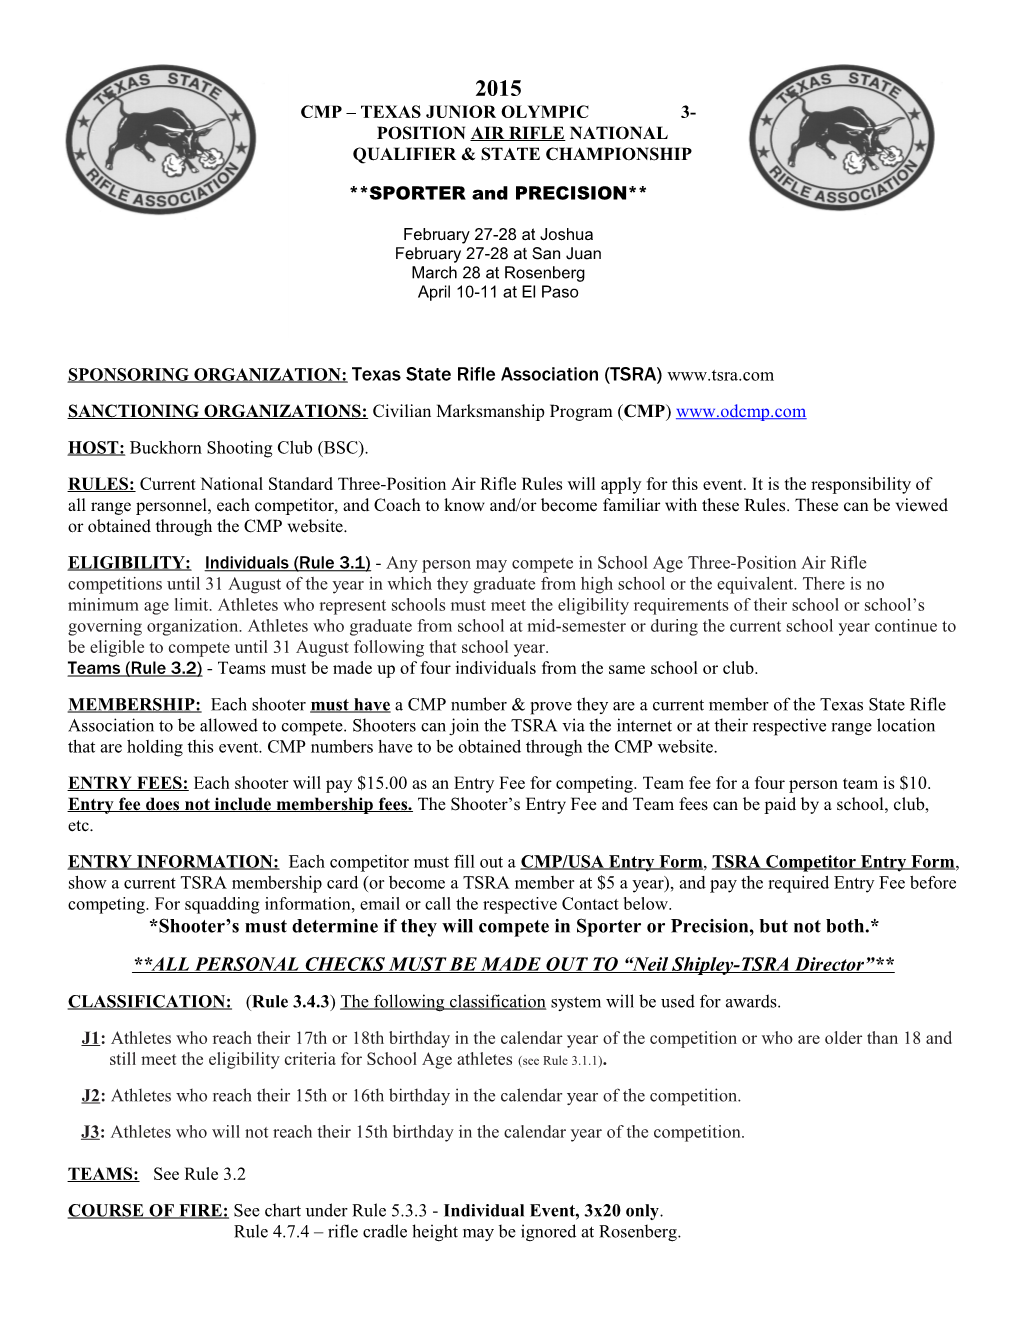 SPONSORING ORGANIZATION: Texas State Rifle Association (TSRA)